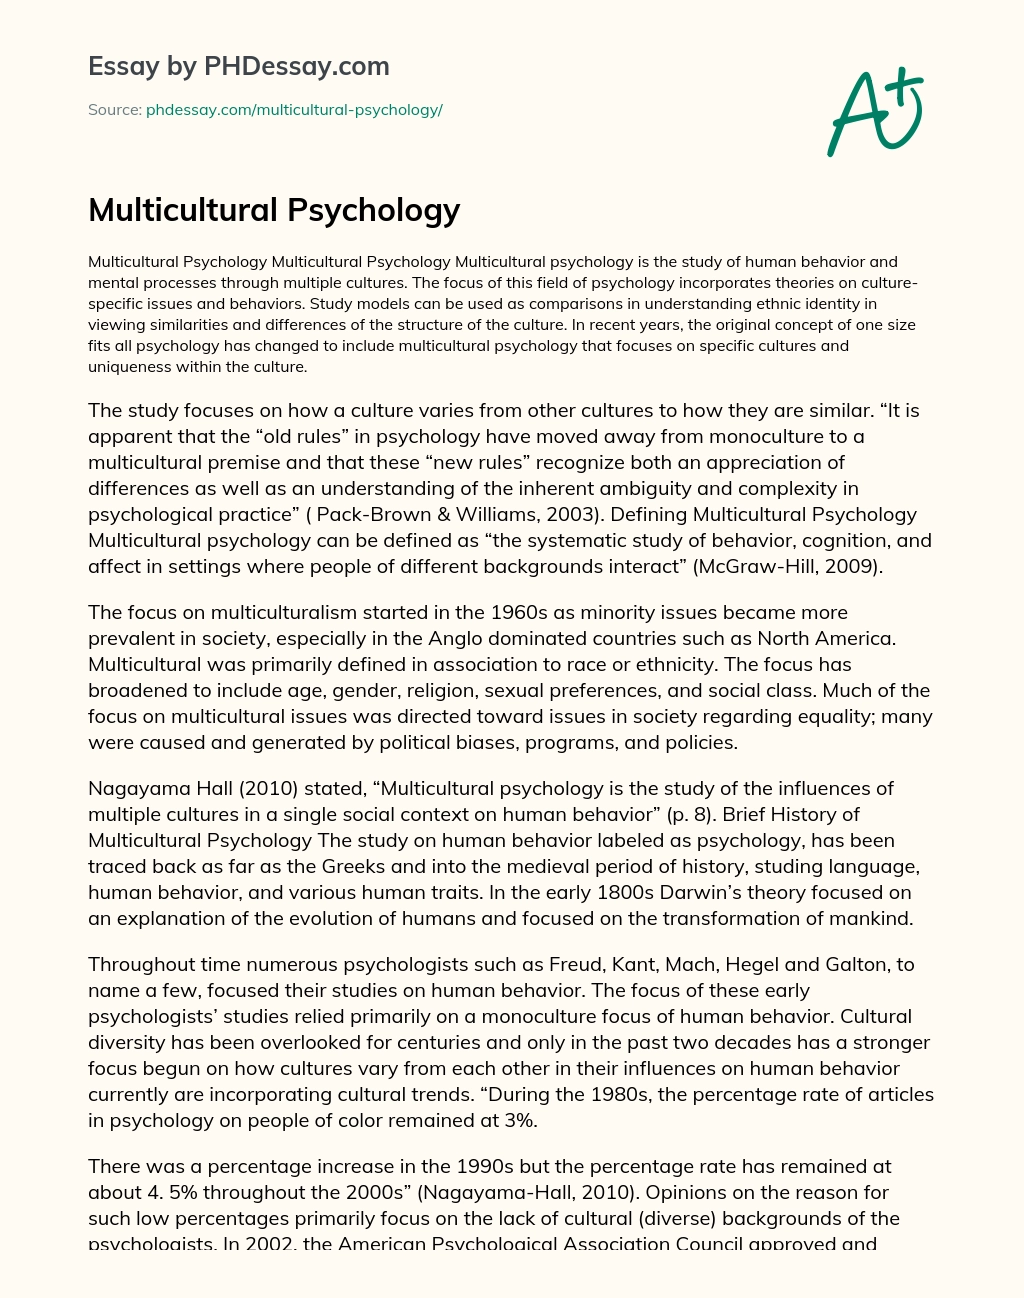 Multicultural Psychology essay